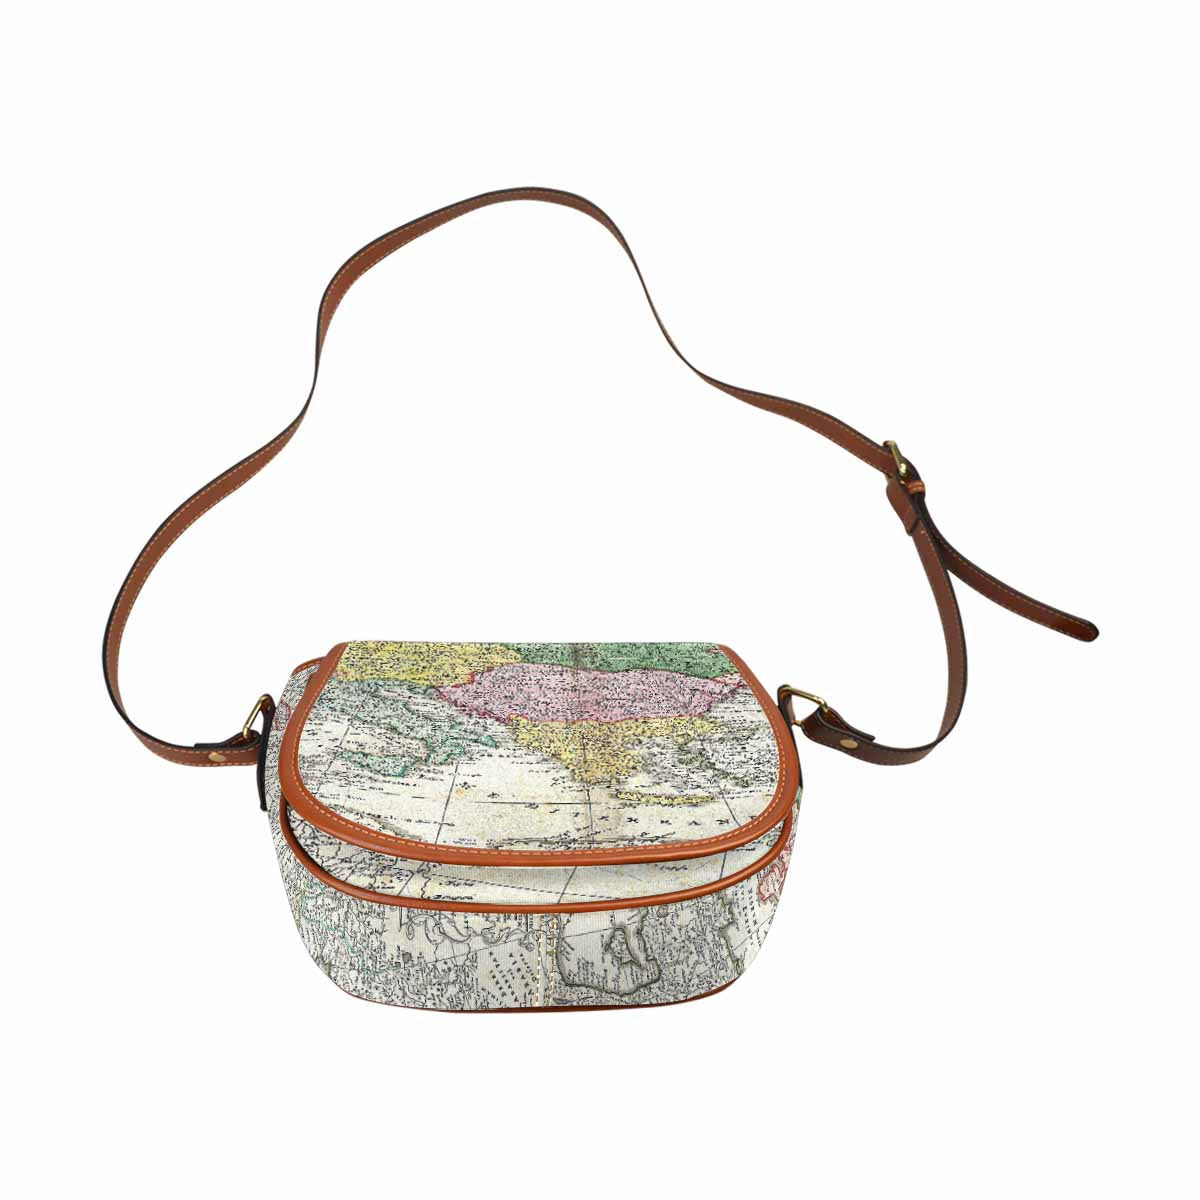 Antique Map design Handbag, saddle bag, Design 30